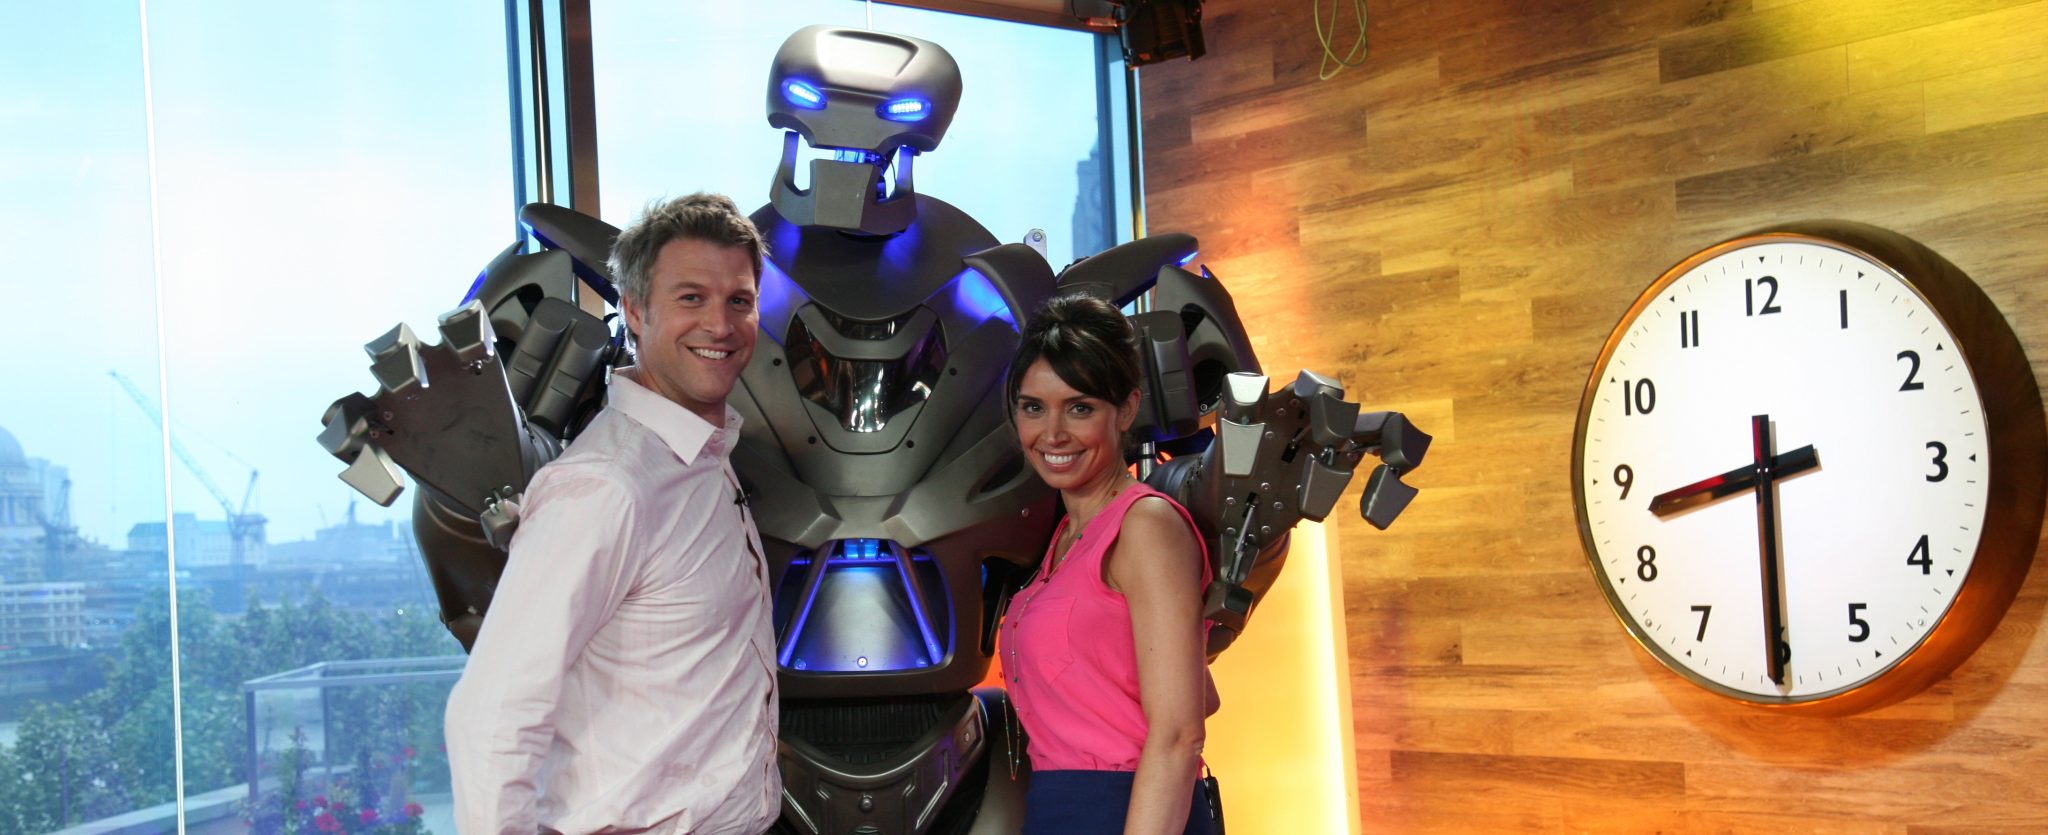 Titan the Robot on Daybreak TV with Dan Lobb and Christine Lampard / Bleakley.